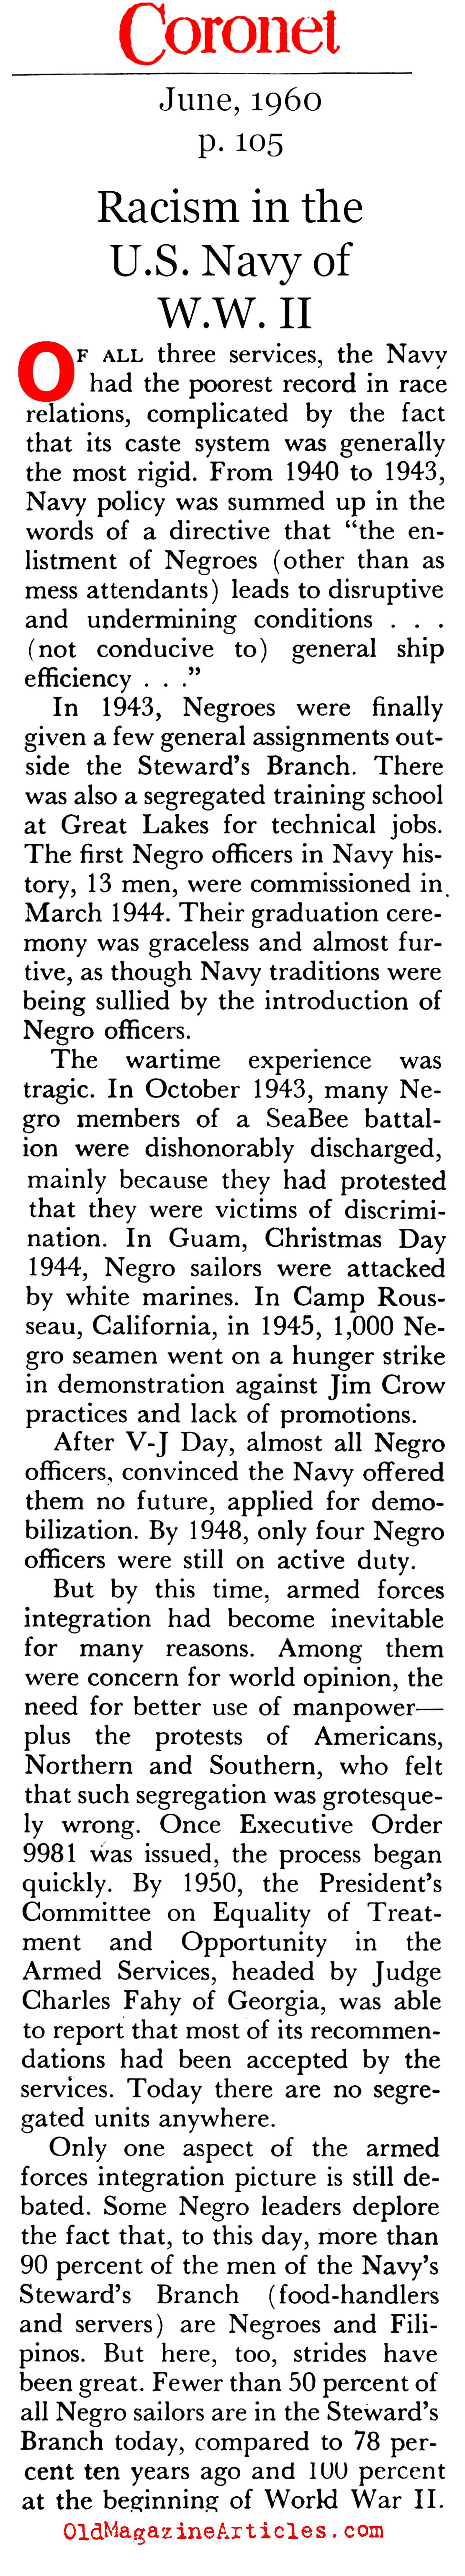 Racism in the U.S. Navy 1941 - 1945 (Coronet Magazine, 1960)